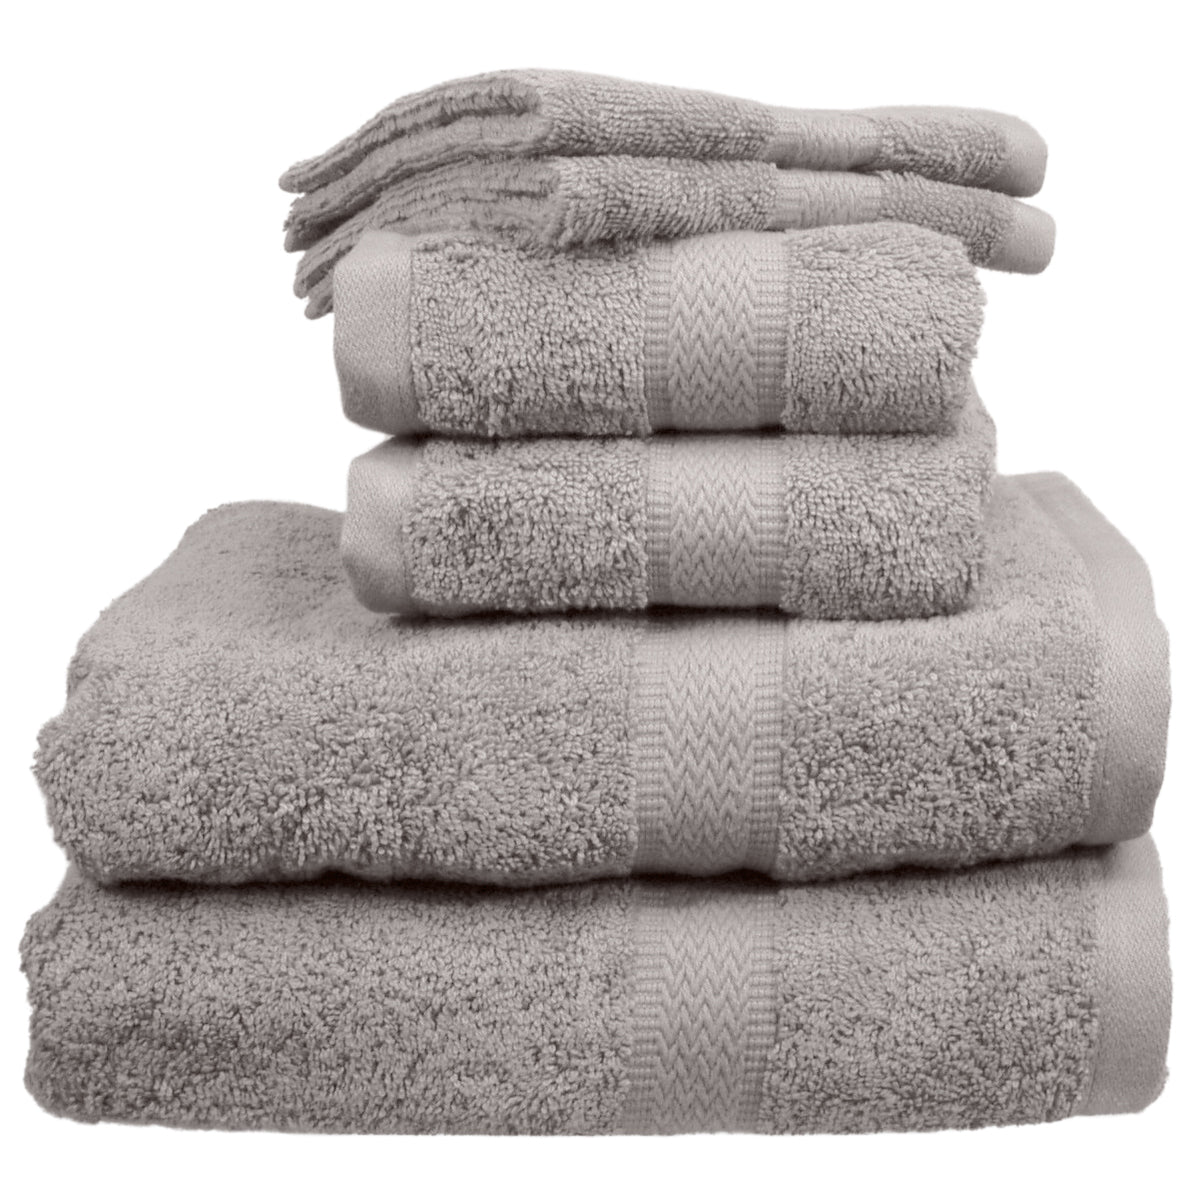 Eurow Microfiber Hand Towels, Gray, 2 Pack